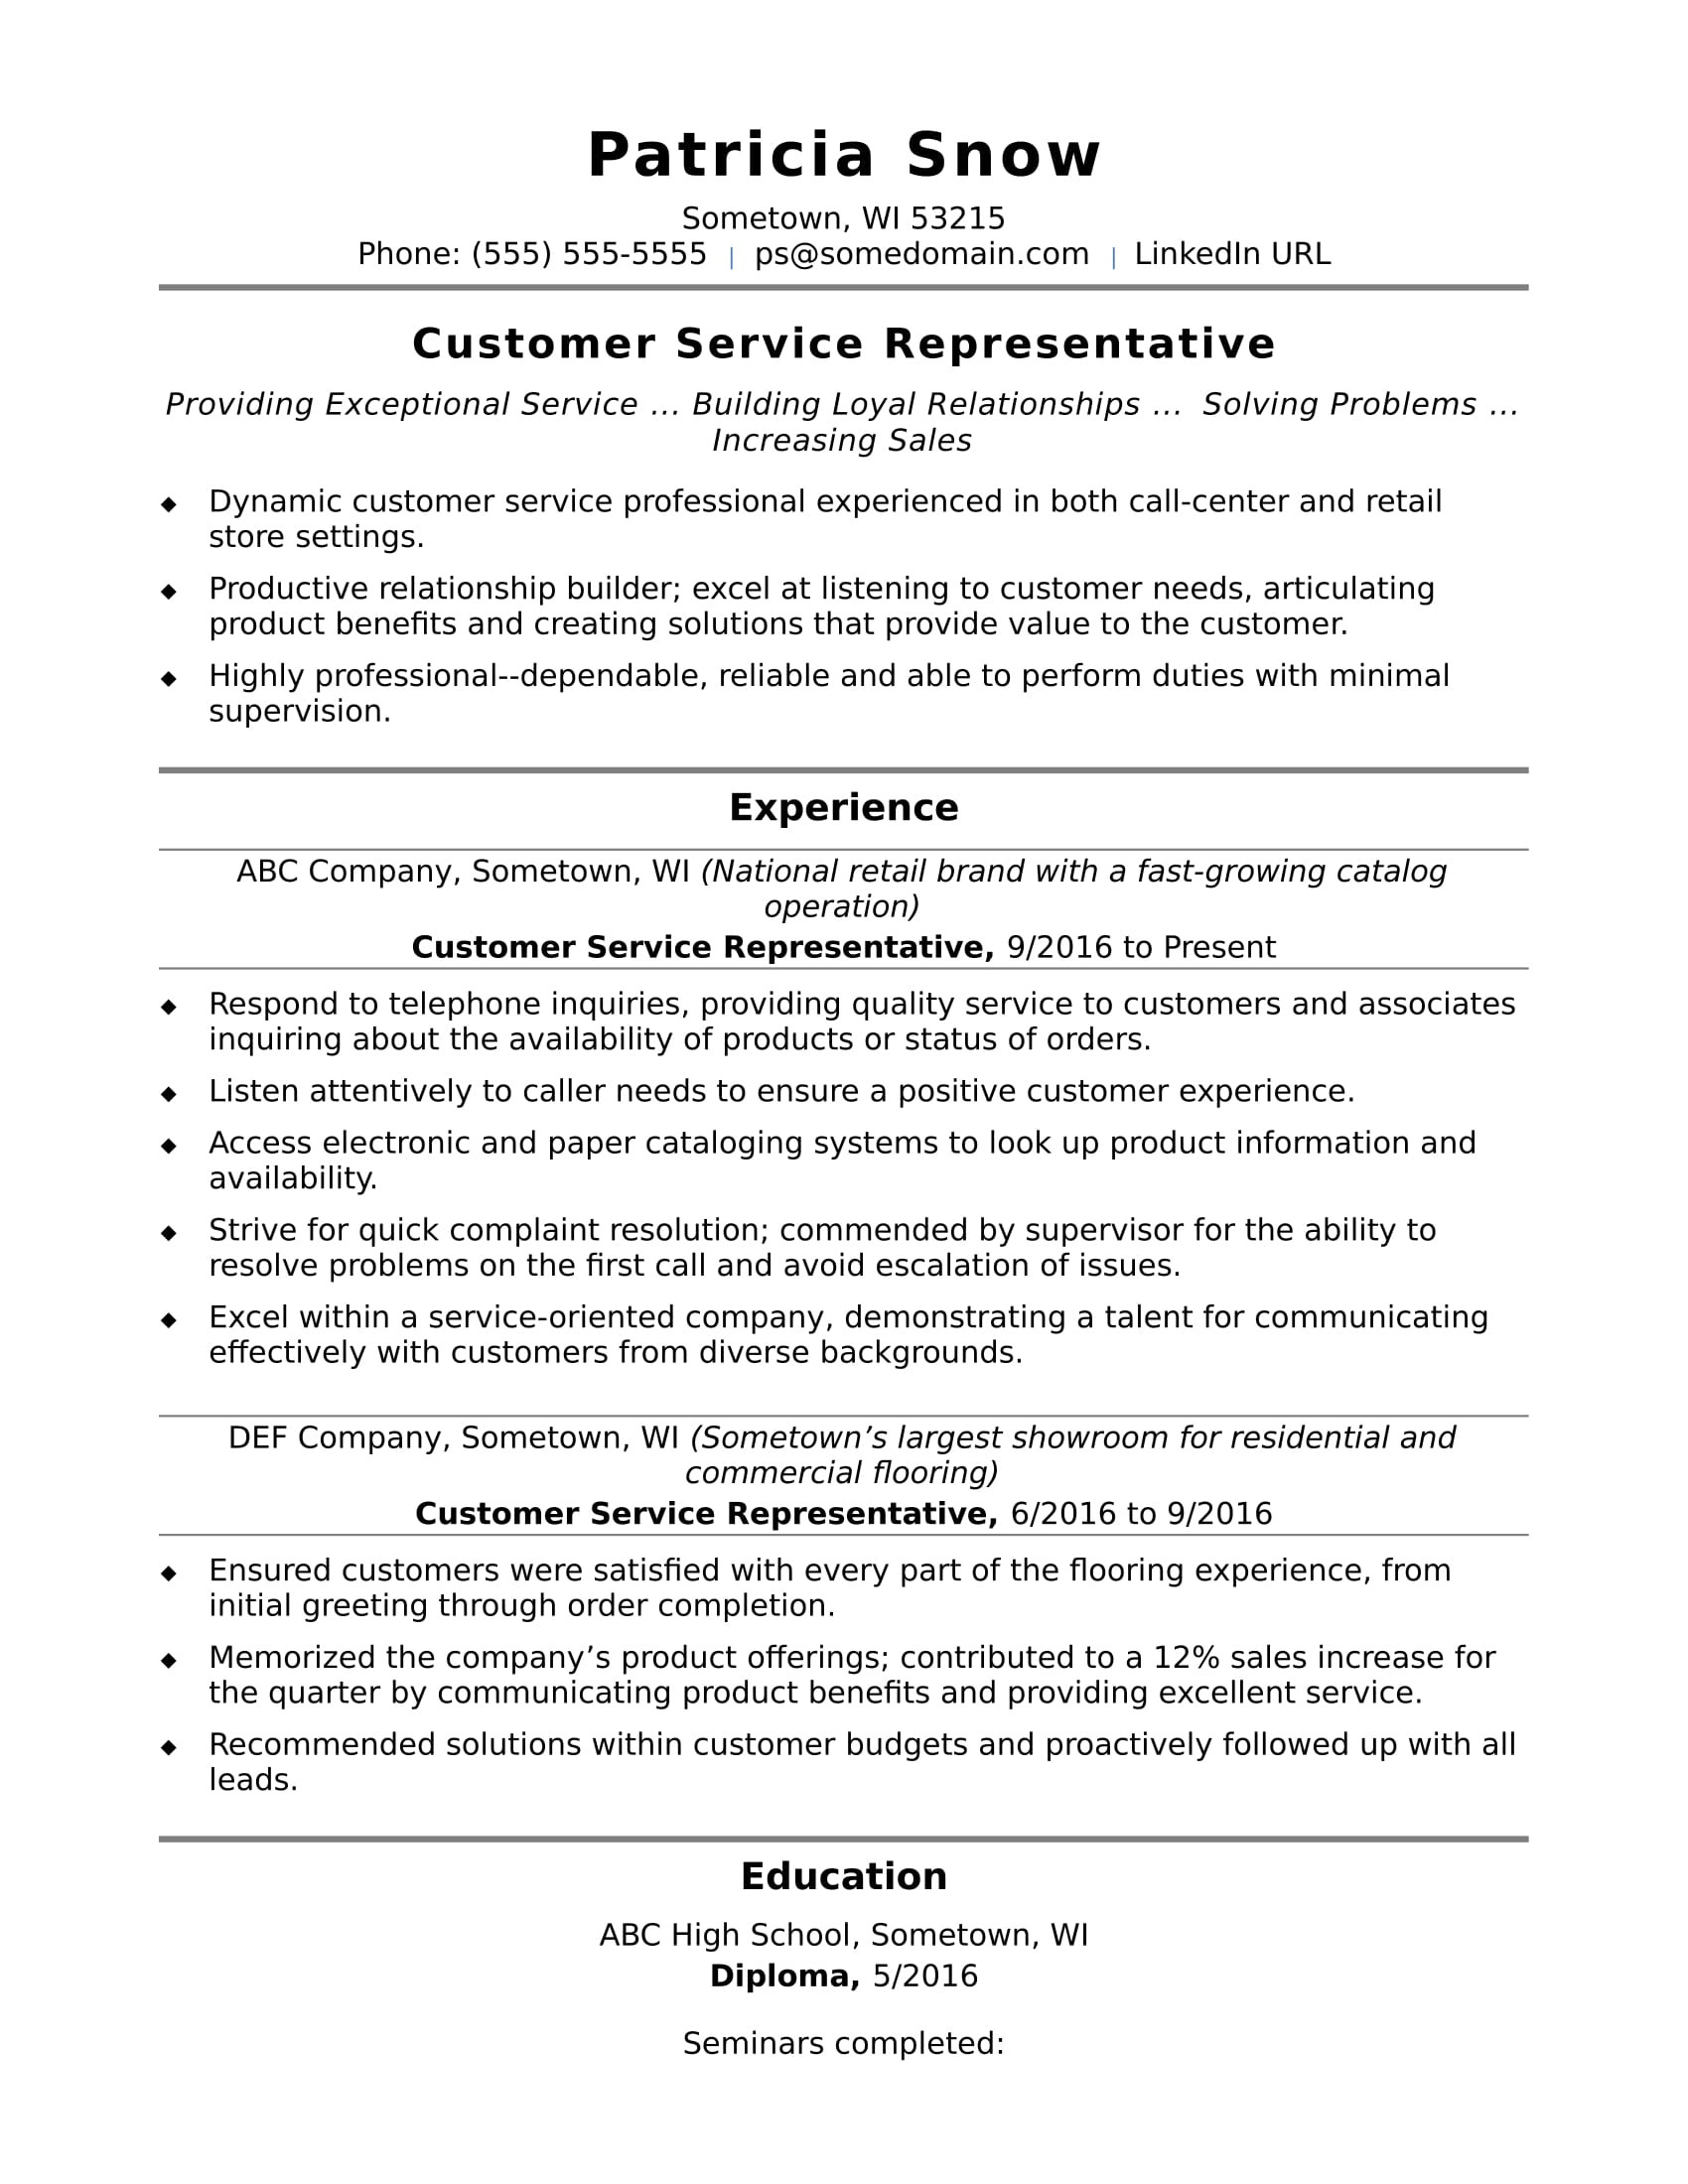 Sample Resume for Experience Customer Service Manager Entry-level Customer Service Resume Sample Monster.com